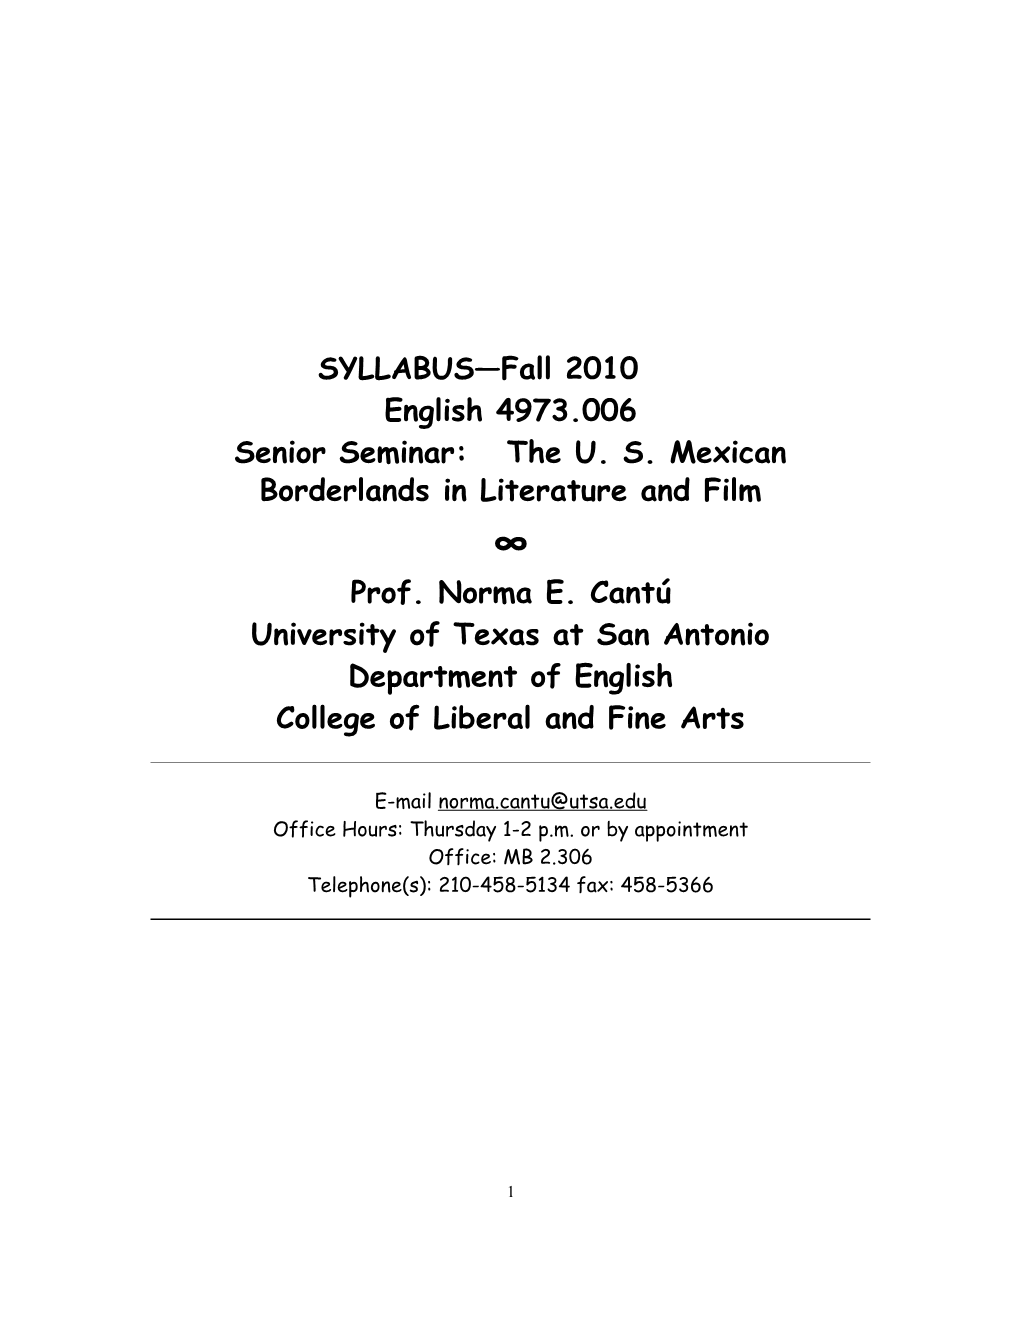 Senior Seminar: the U. S. Mexican Borderlands in Literature and Film